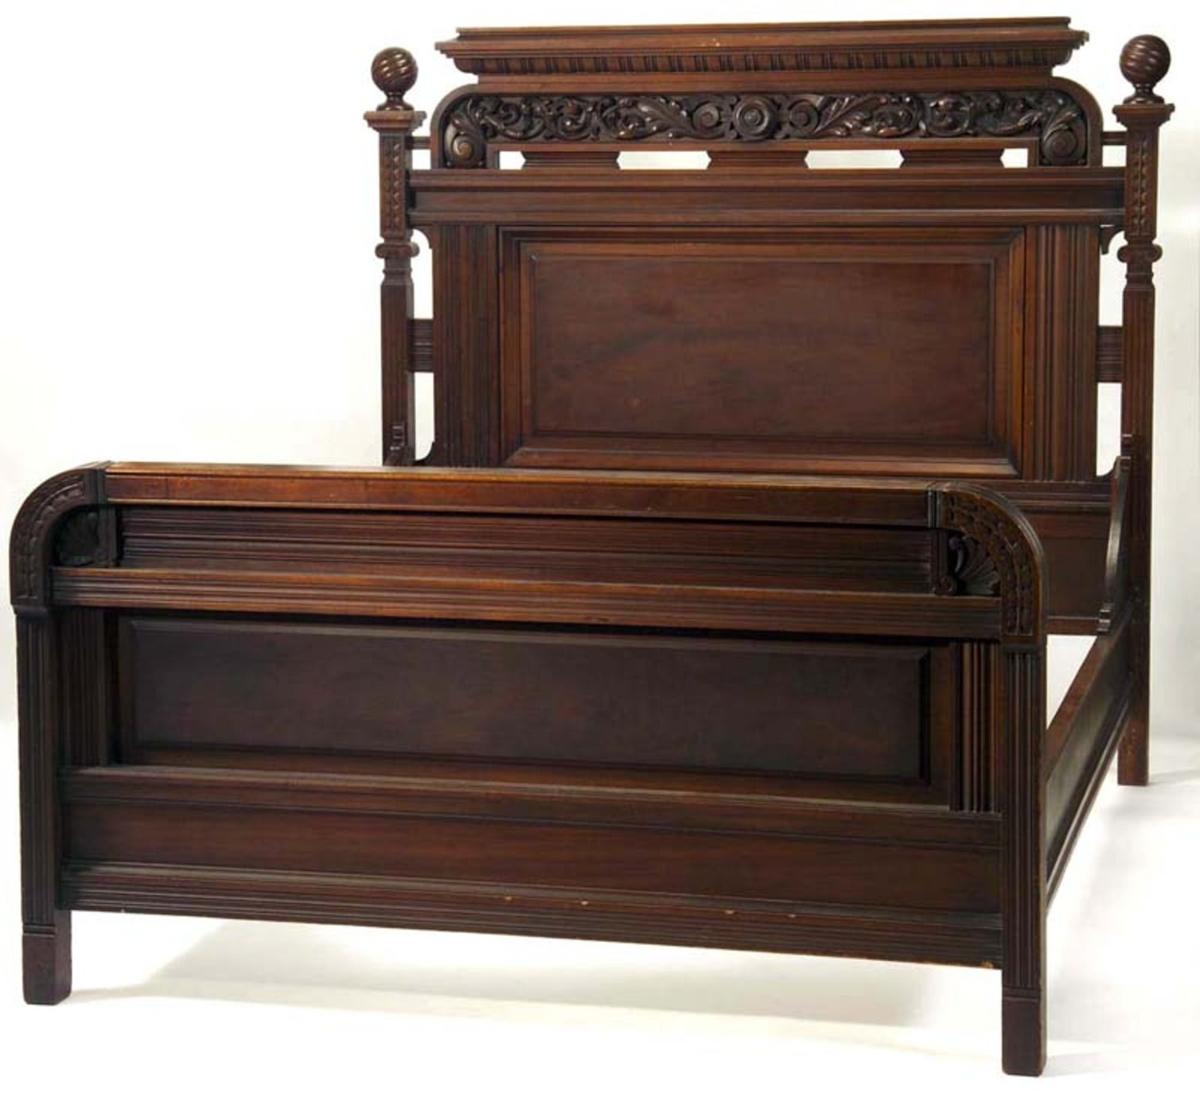 Jean Mcclelland Renaissance Revival Furniture Robust And